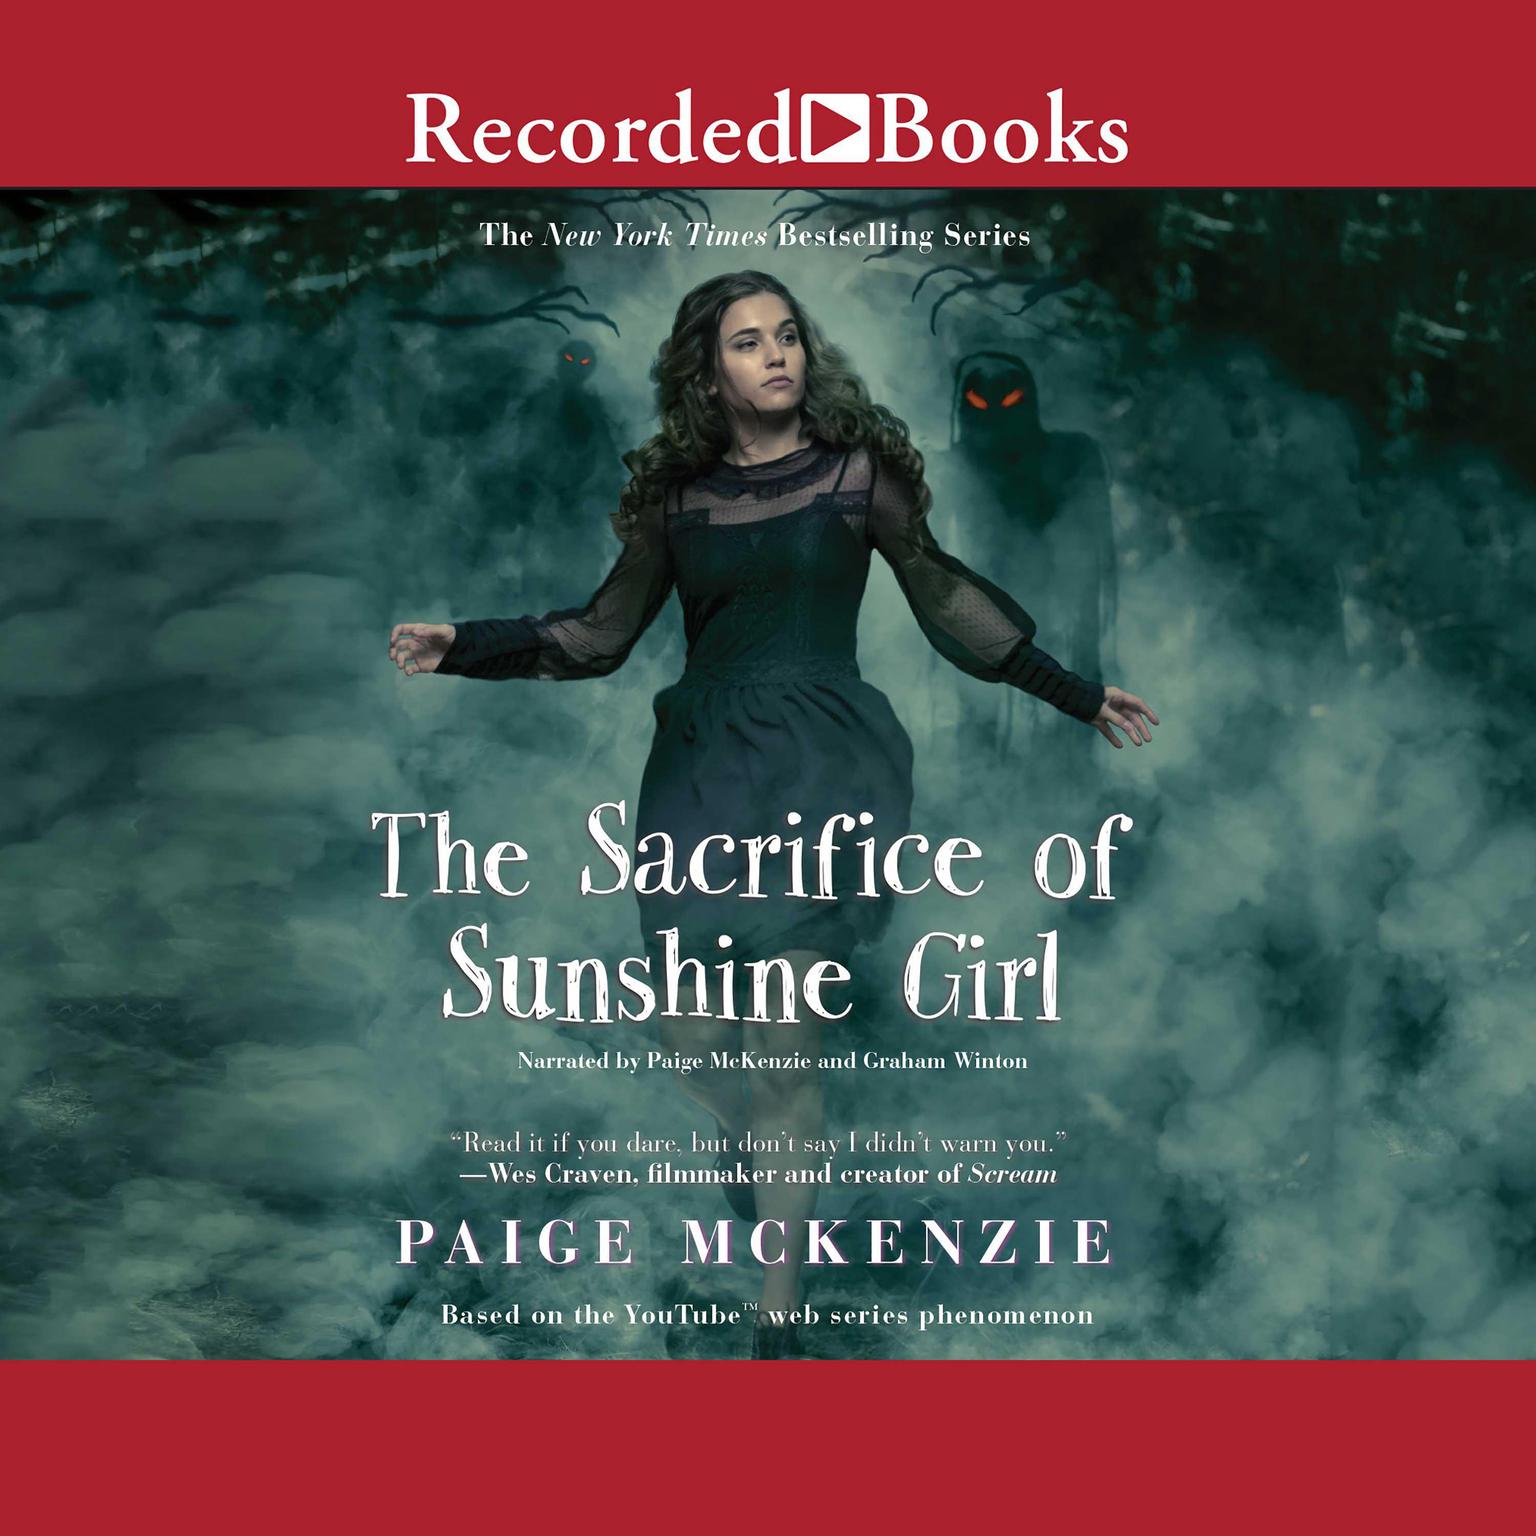 The Sacrifice of Sunshine Girl Audiobook, by Paige McKenzie